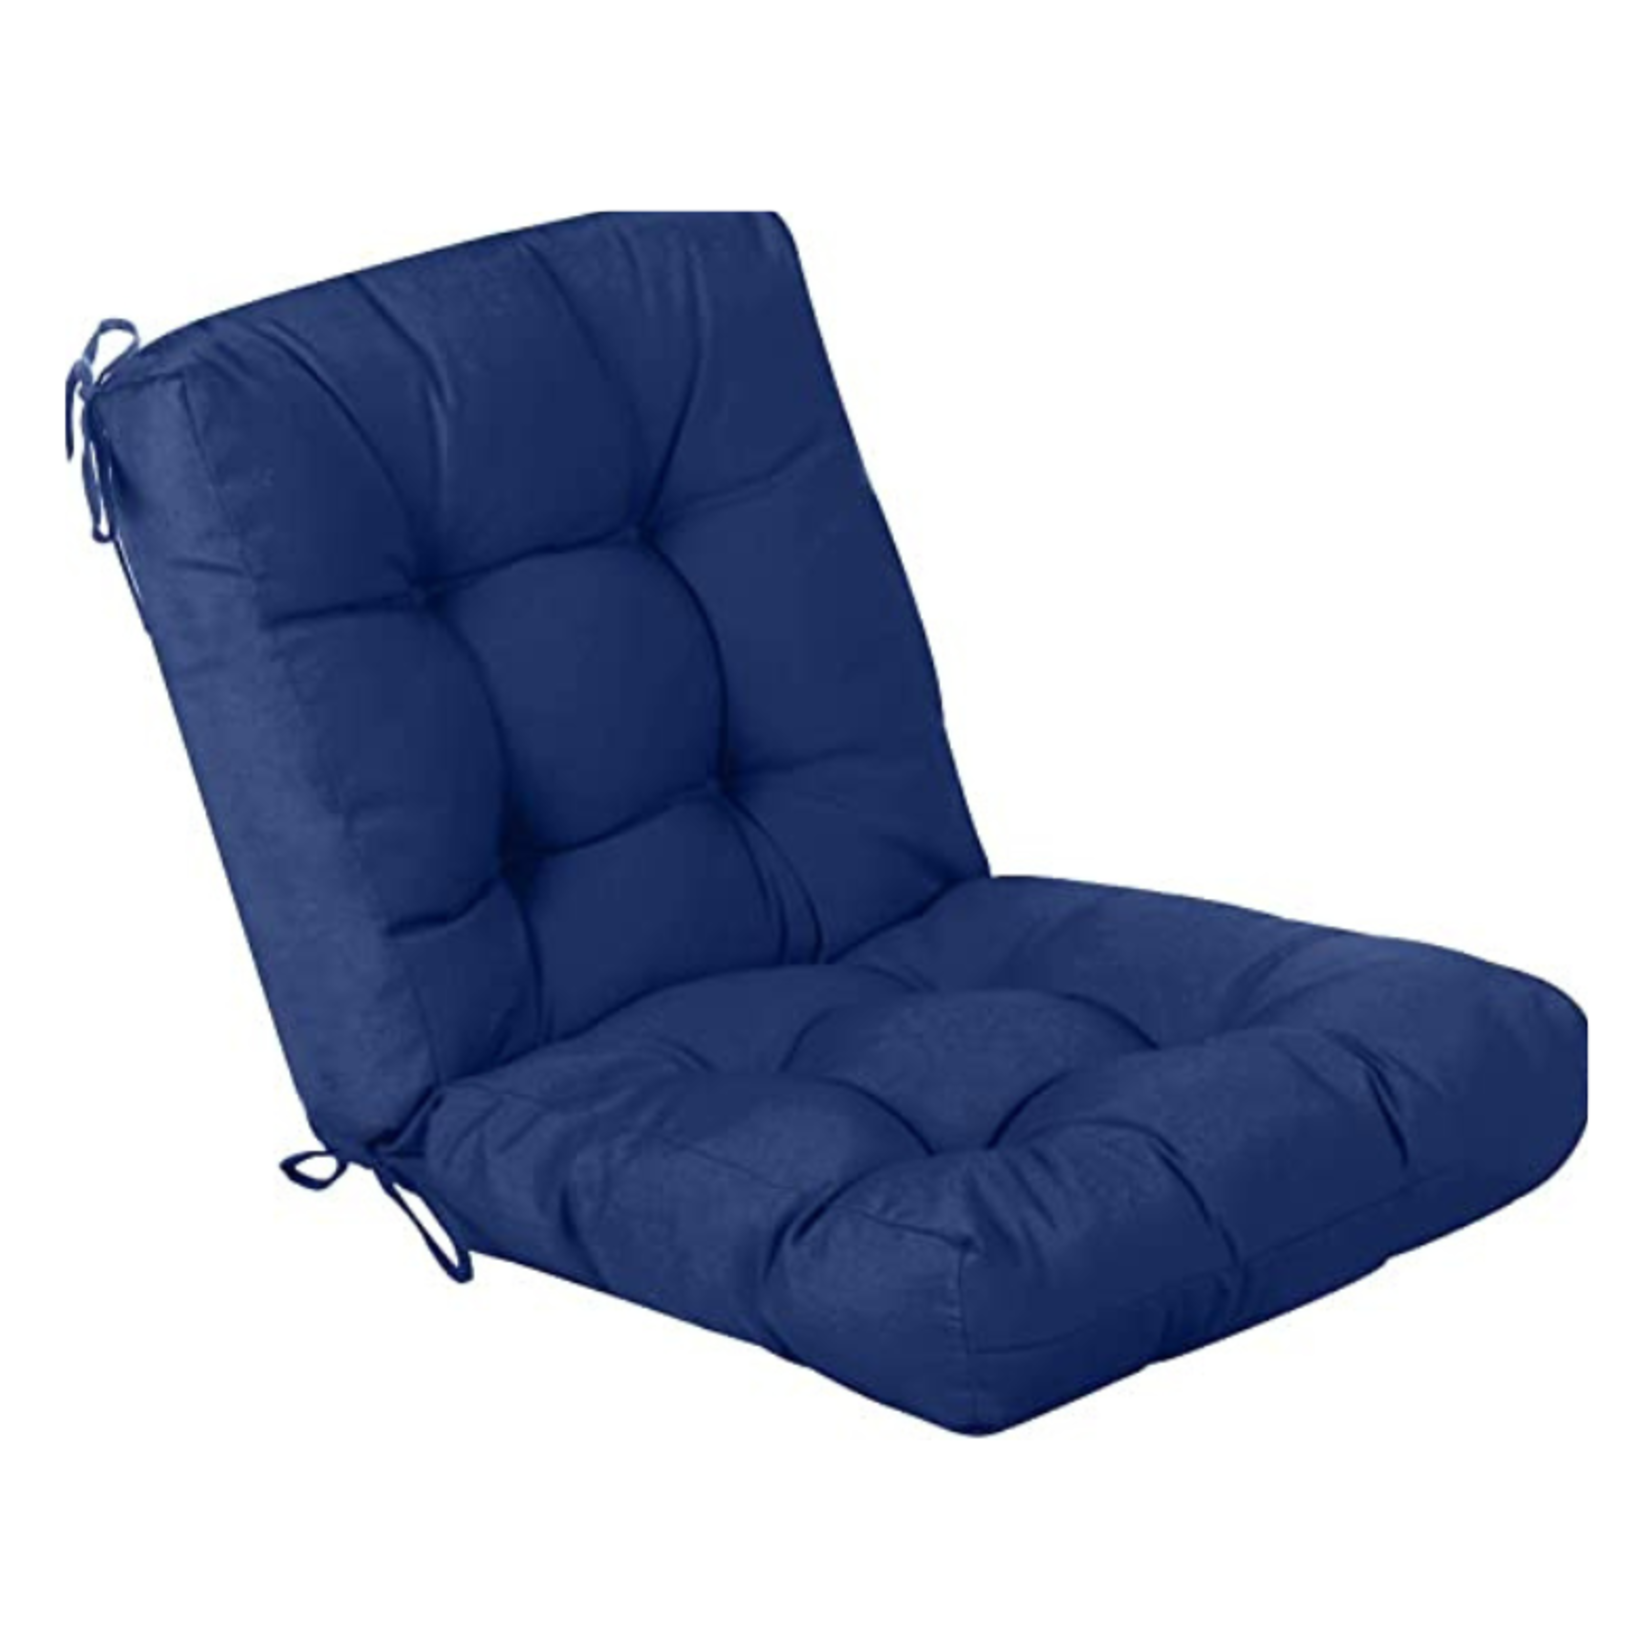 Qilloway Chair Cushion- Seat & Back- Navy